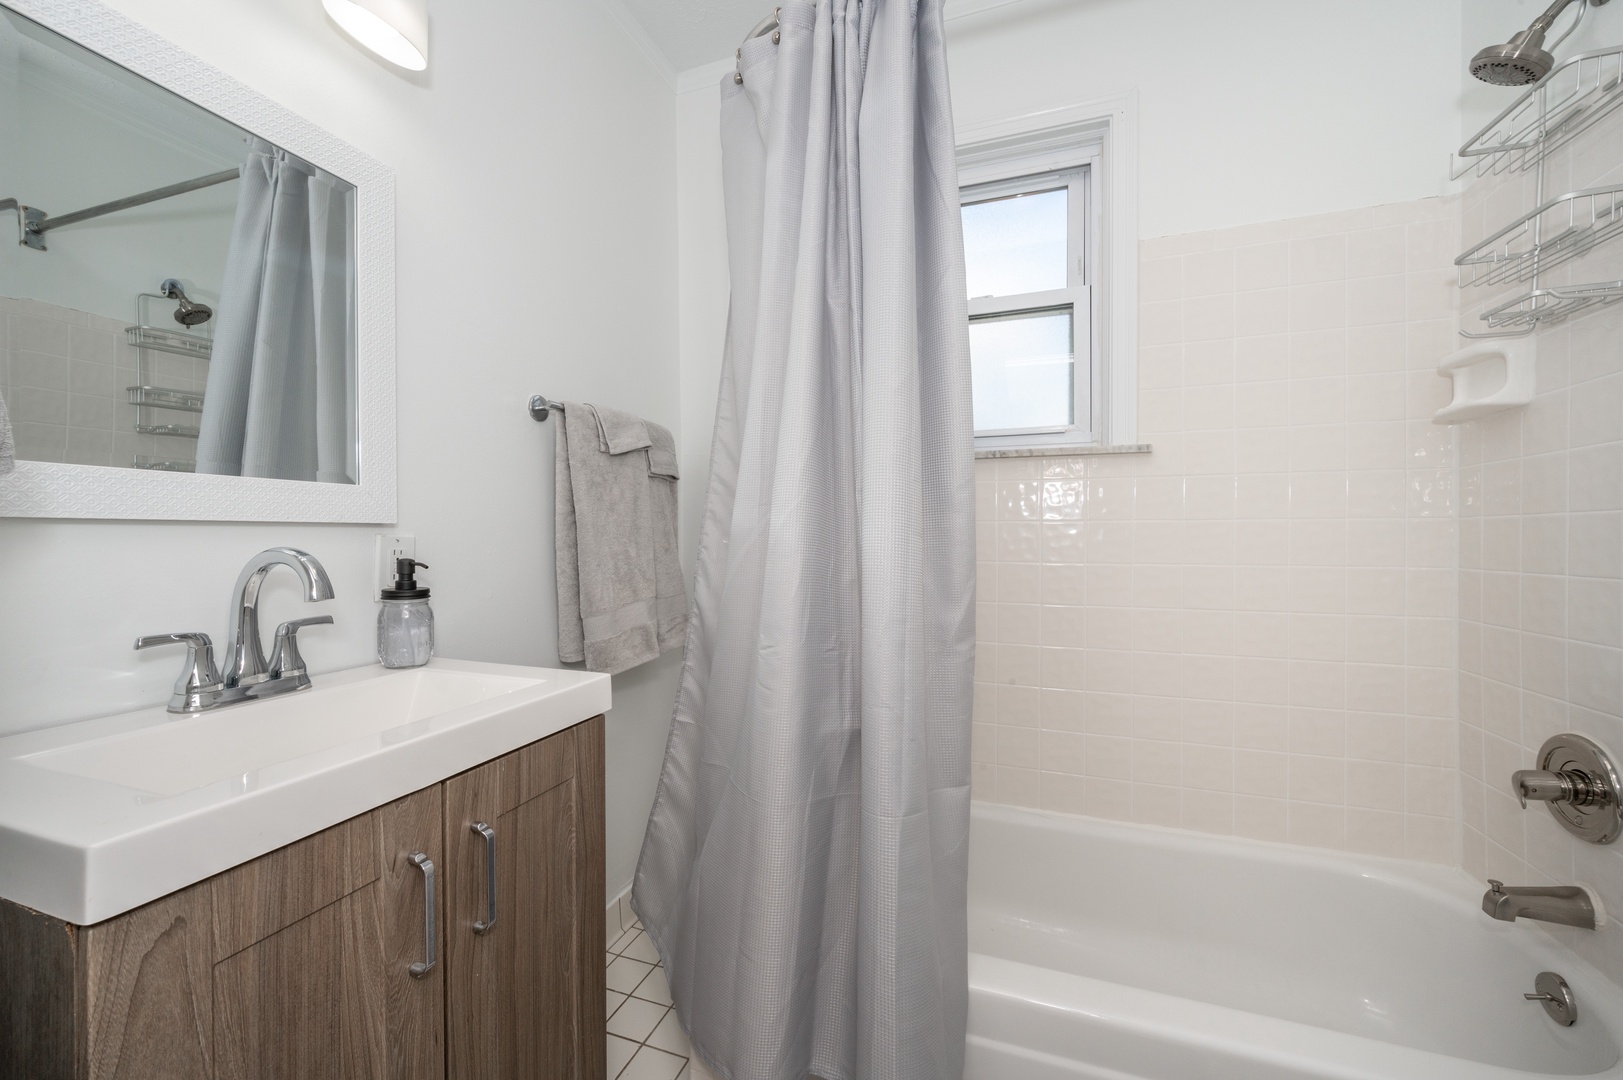 Unit 2 – The main-level full bath offers a single vanity & shower/tub combo